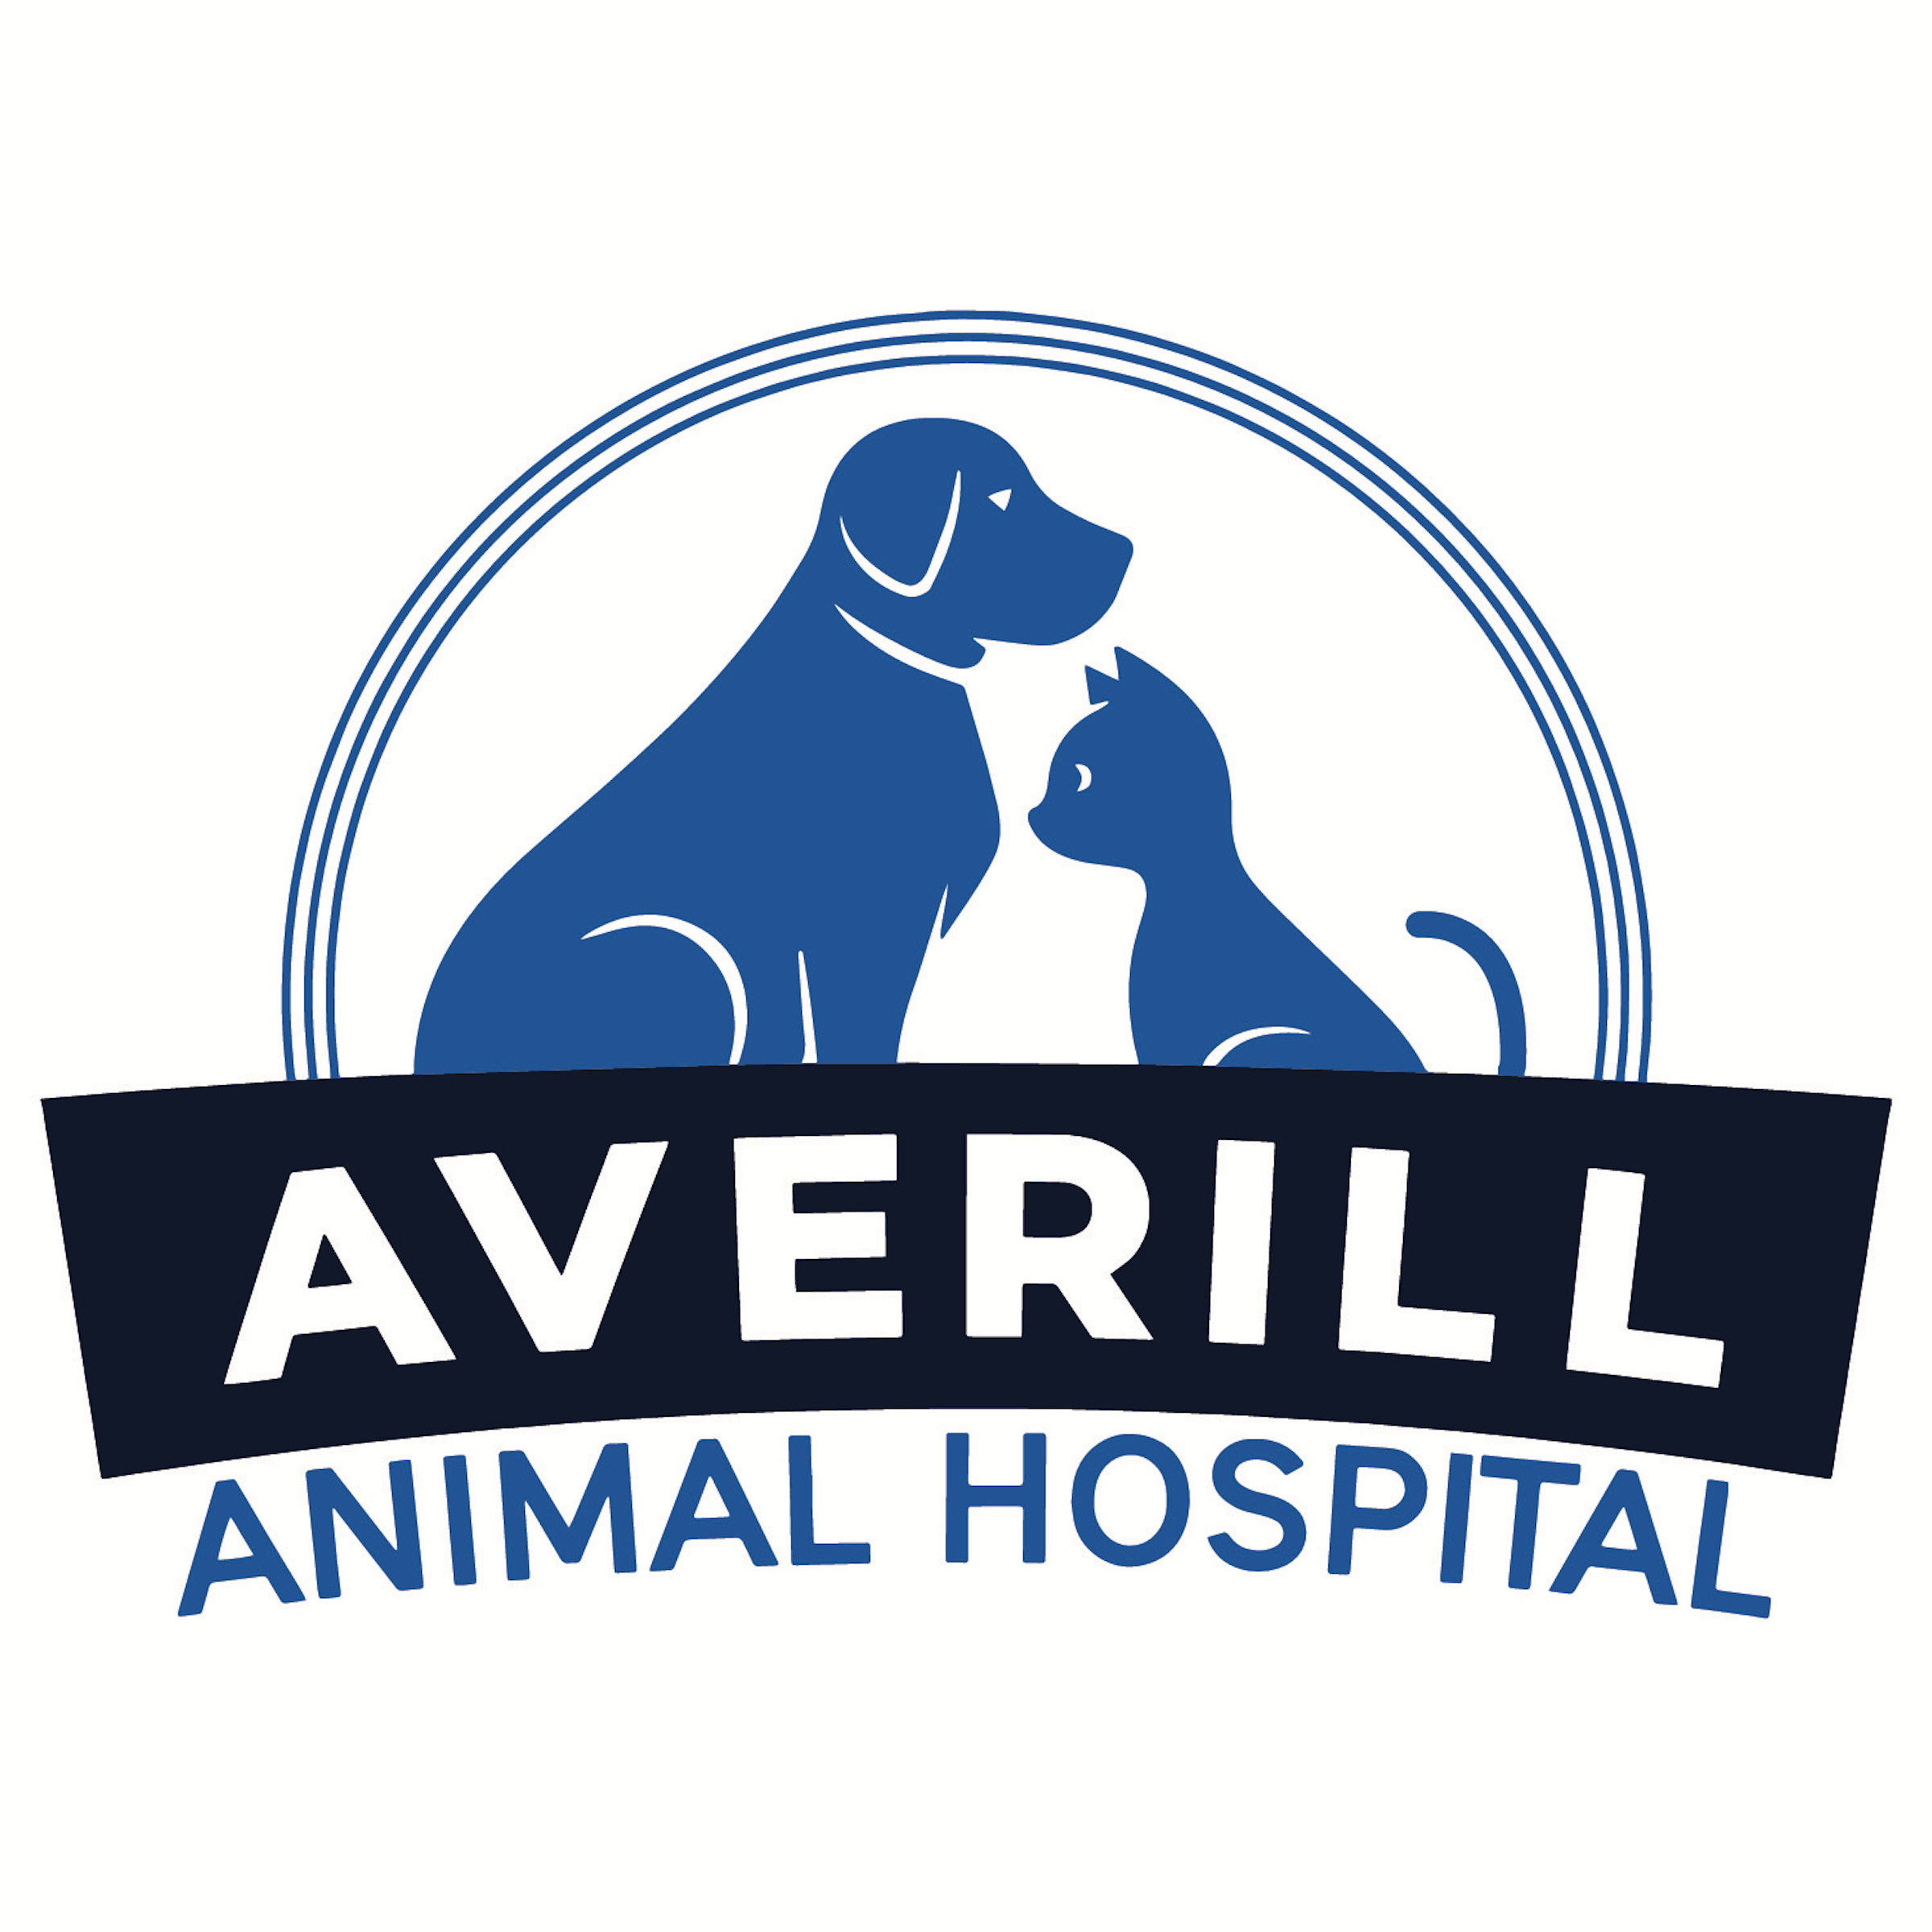 Averill Animal Hospital - Marietta, GA 30064 - (770)422-2402 | ShowMeLocal.com